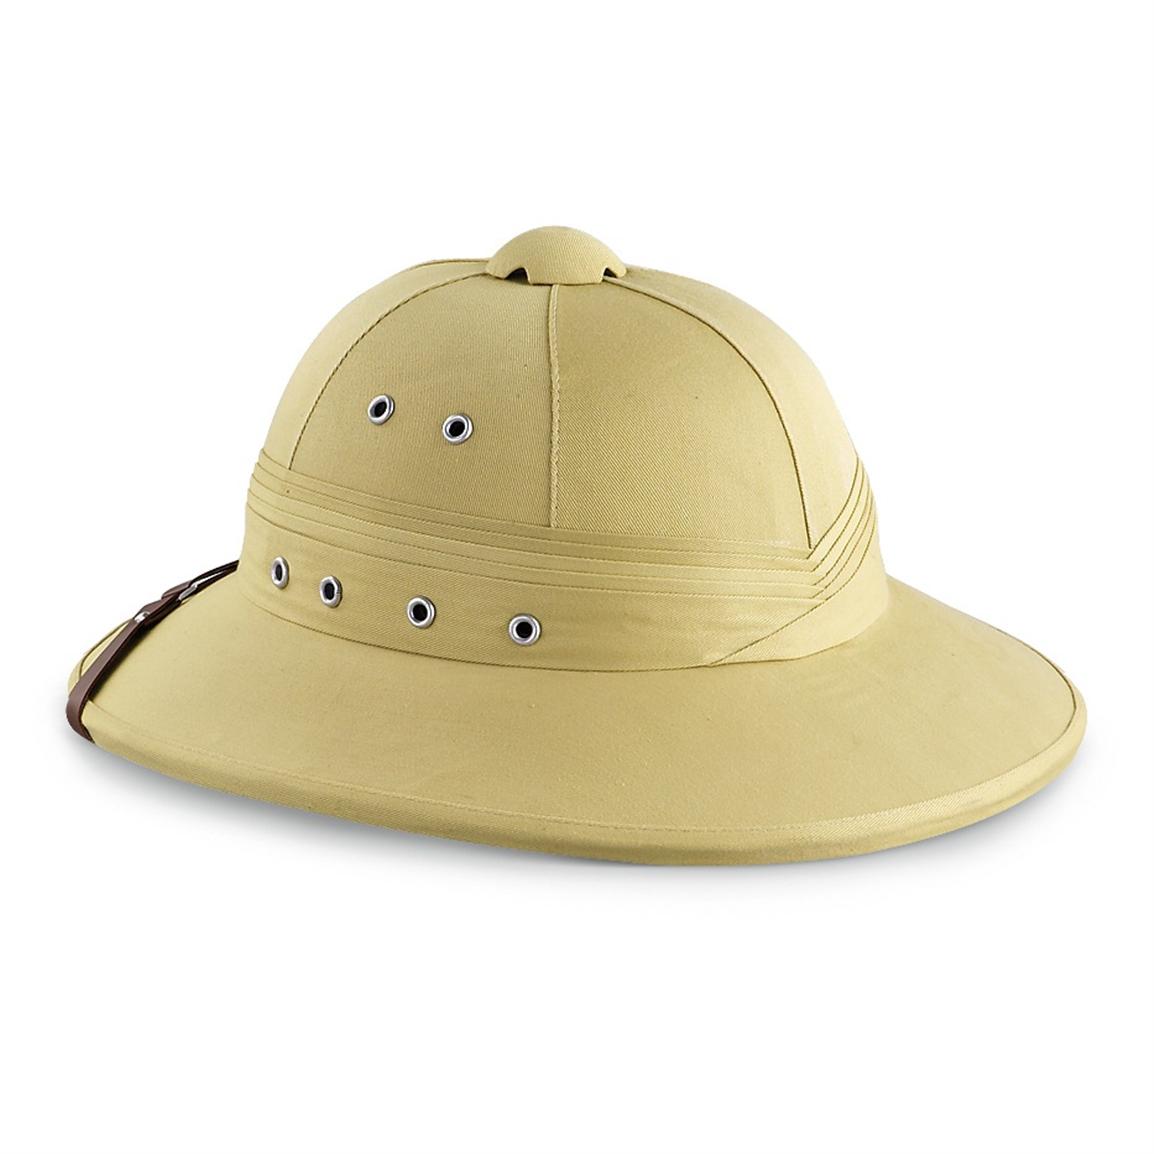 U.S. Military - style Pith Helmet, Khaki - 204774, Military Hats & Caps ...